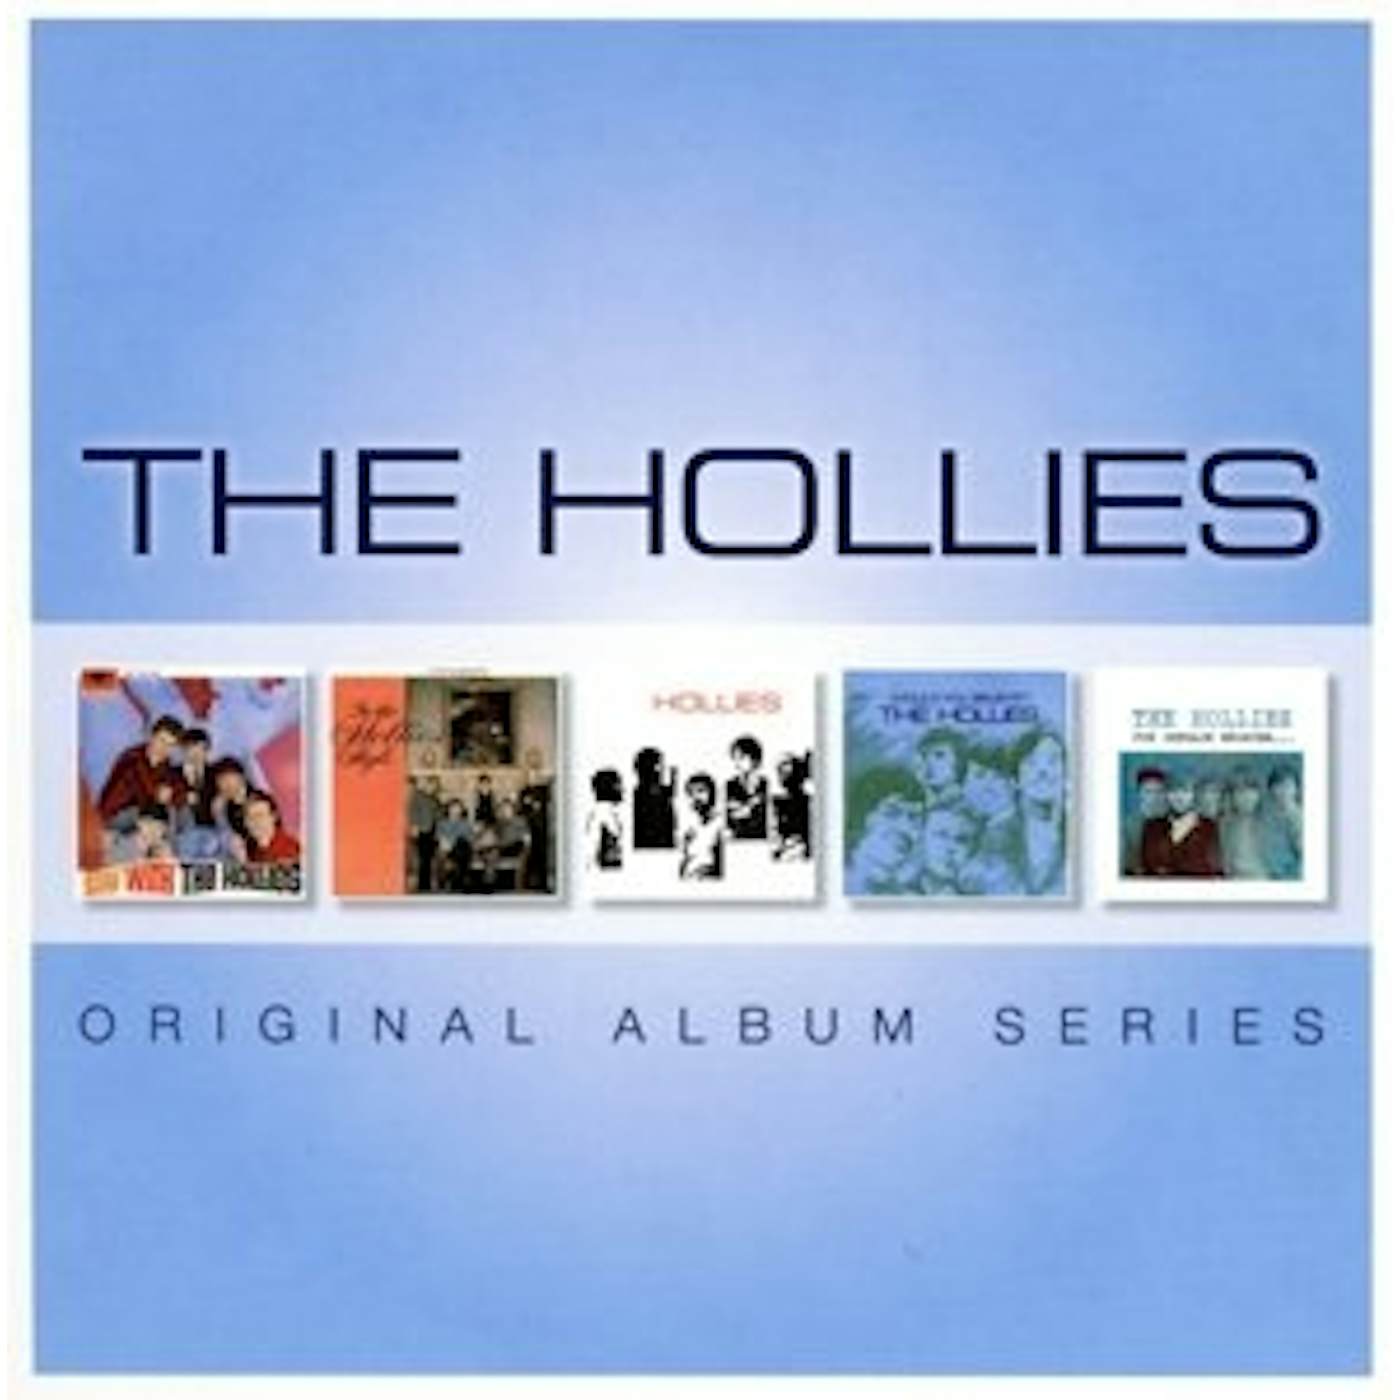 The Hollies ORIGINAL ALBUM SERIES CD